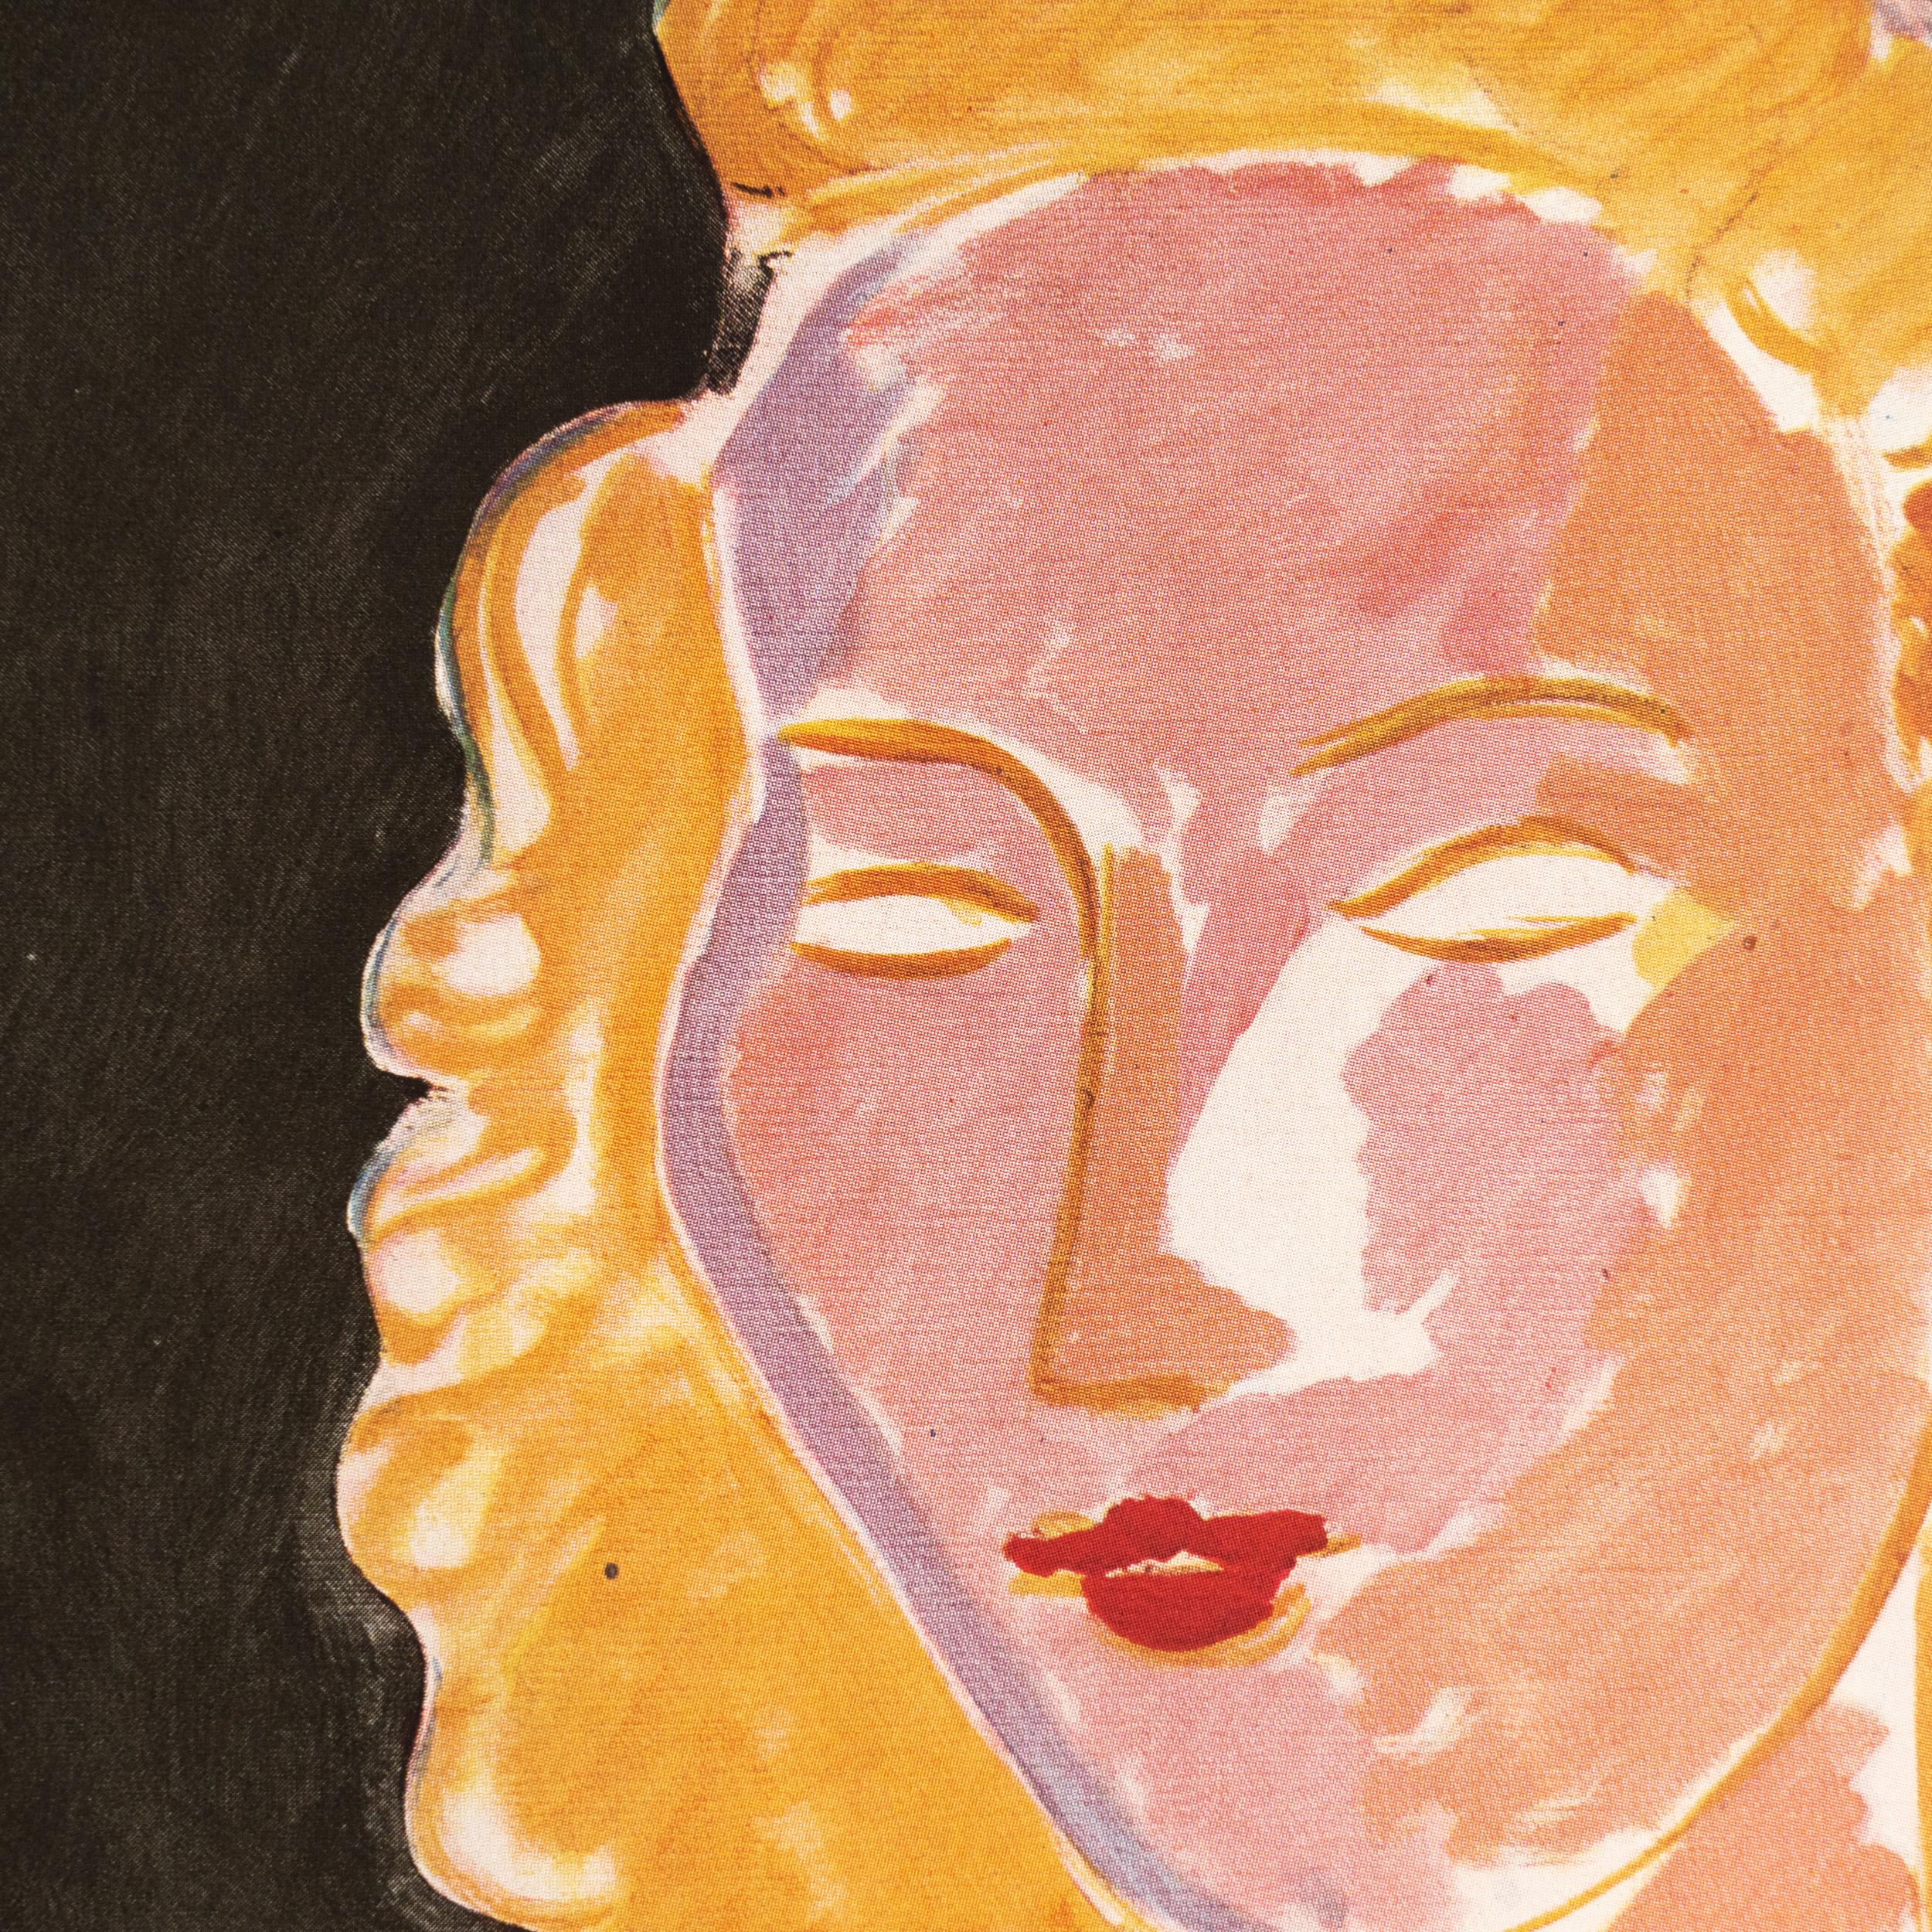 Rare Color Lithograph: A Glimpse into Matisse's Artistic Mastery In Good Condition For Sale In Barcelona, Barcelona